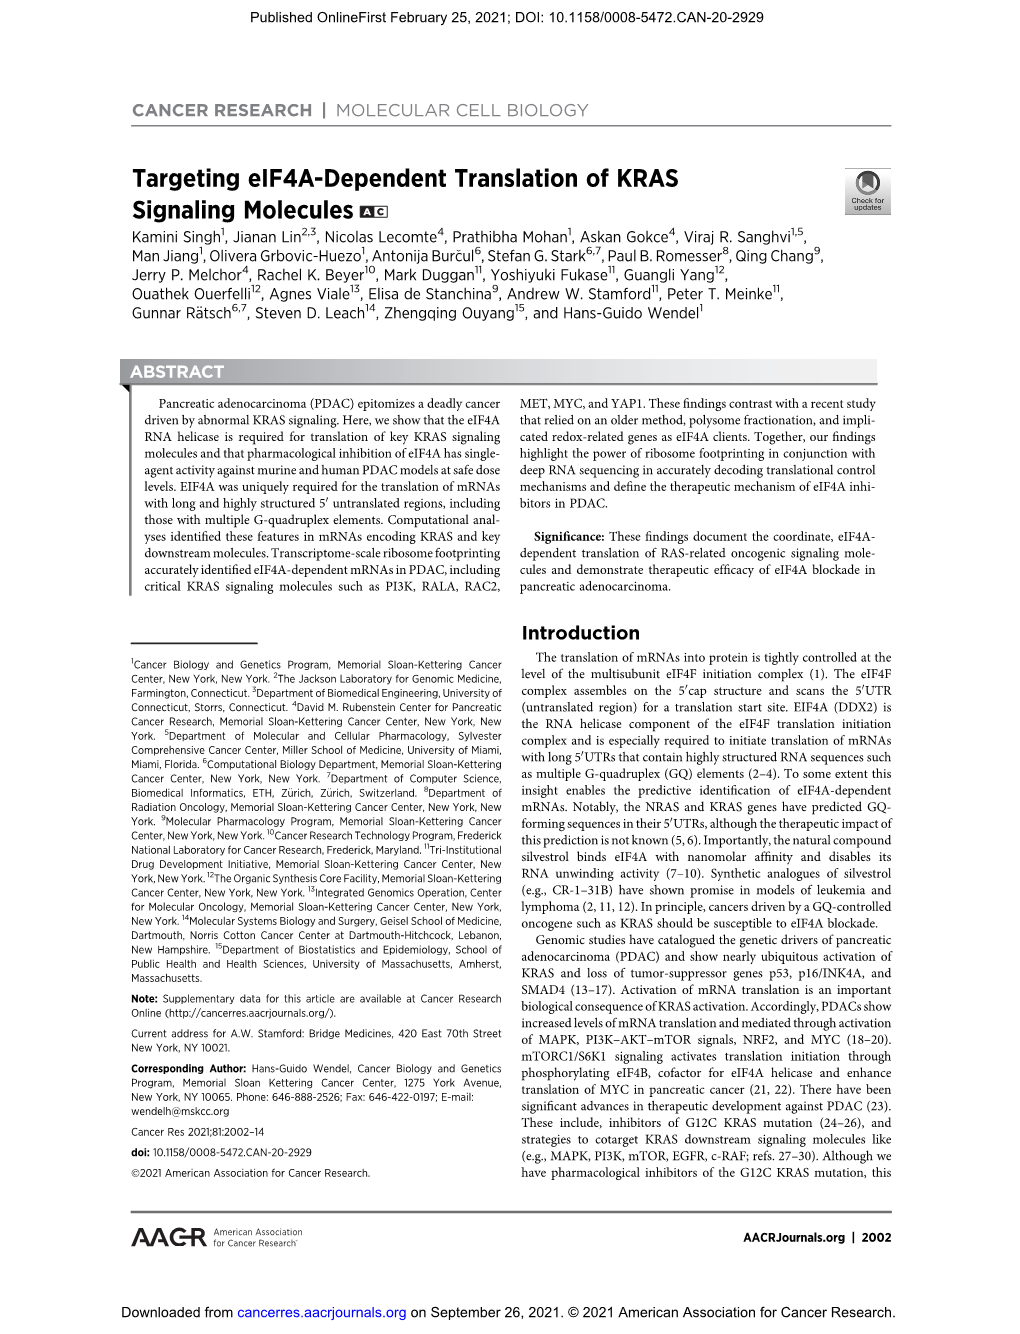 Targeting Eif4a-Dependent Translation of KRAS Signaling Molecules a C Kamini Singh1, Jianan Lin2,3, Nicolas Lecomte4, Prathibha Mohan1, Askan Gokce4, Viraj R